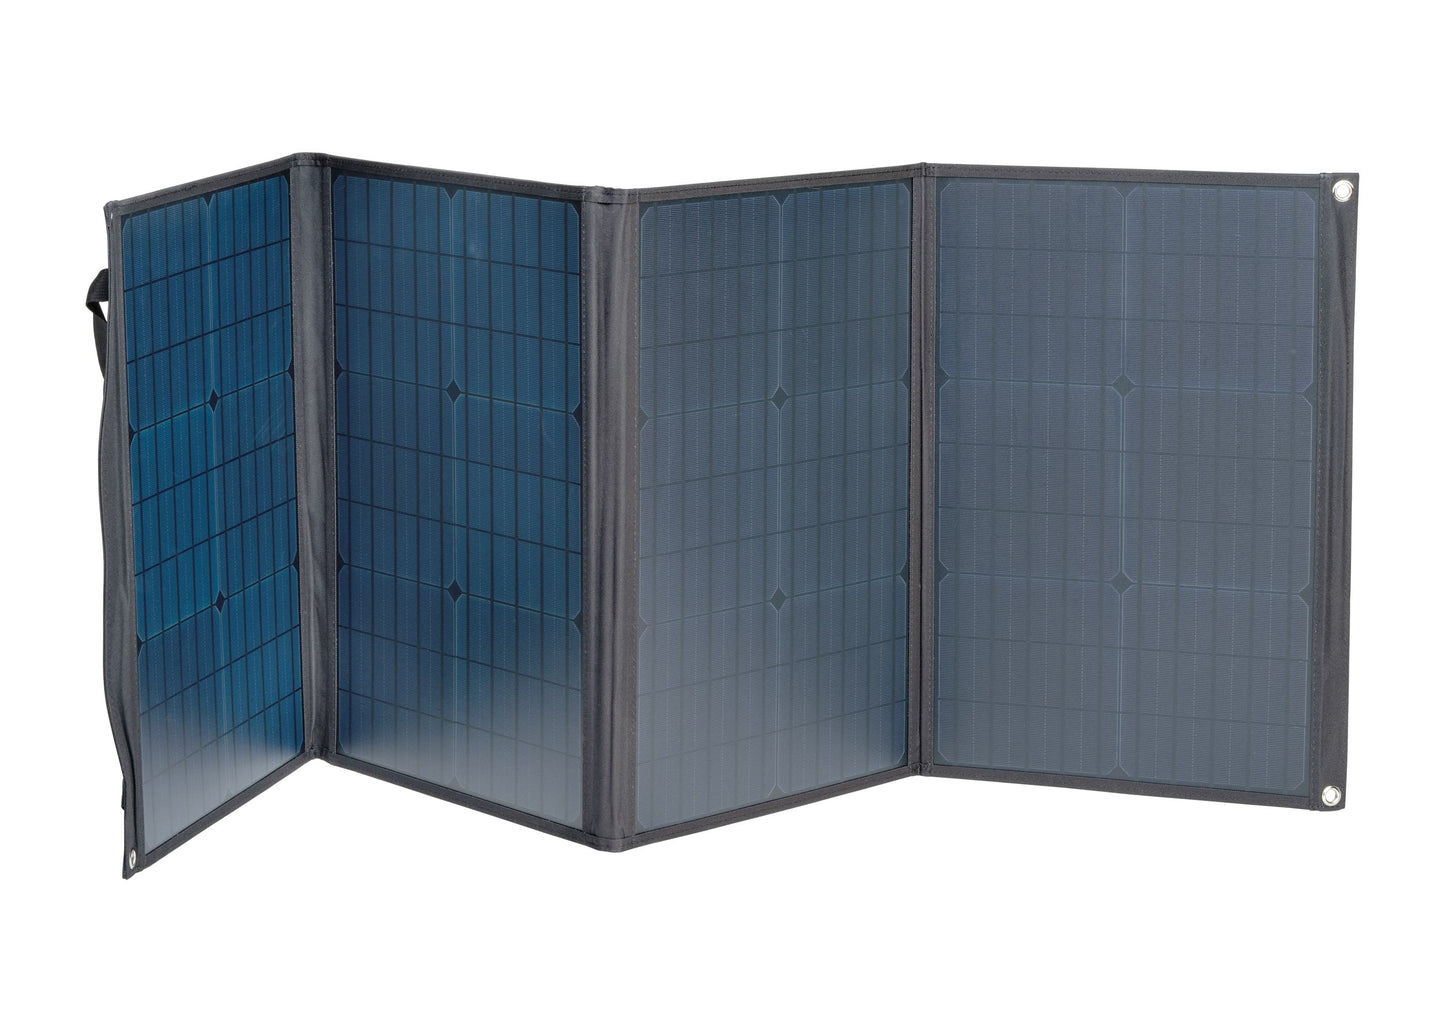 Epropulsion Foldable Solar Panel